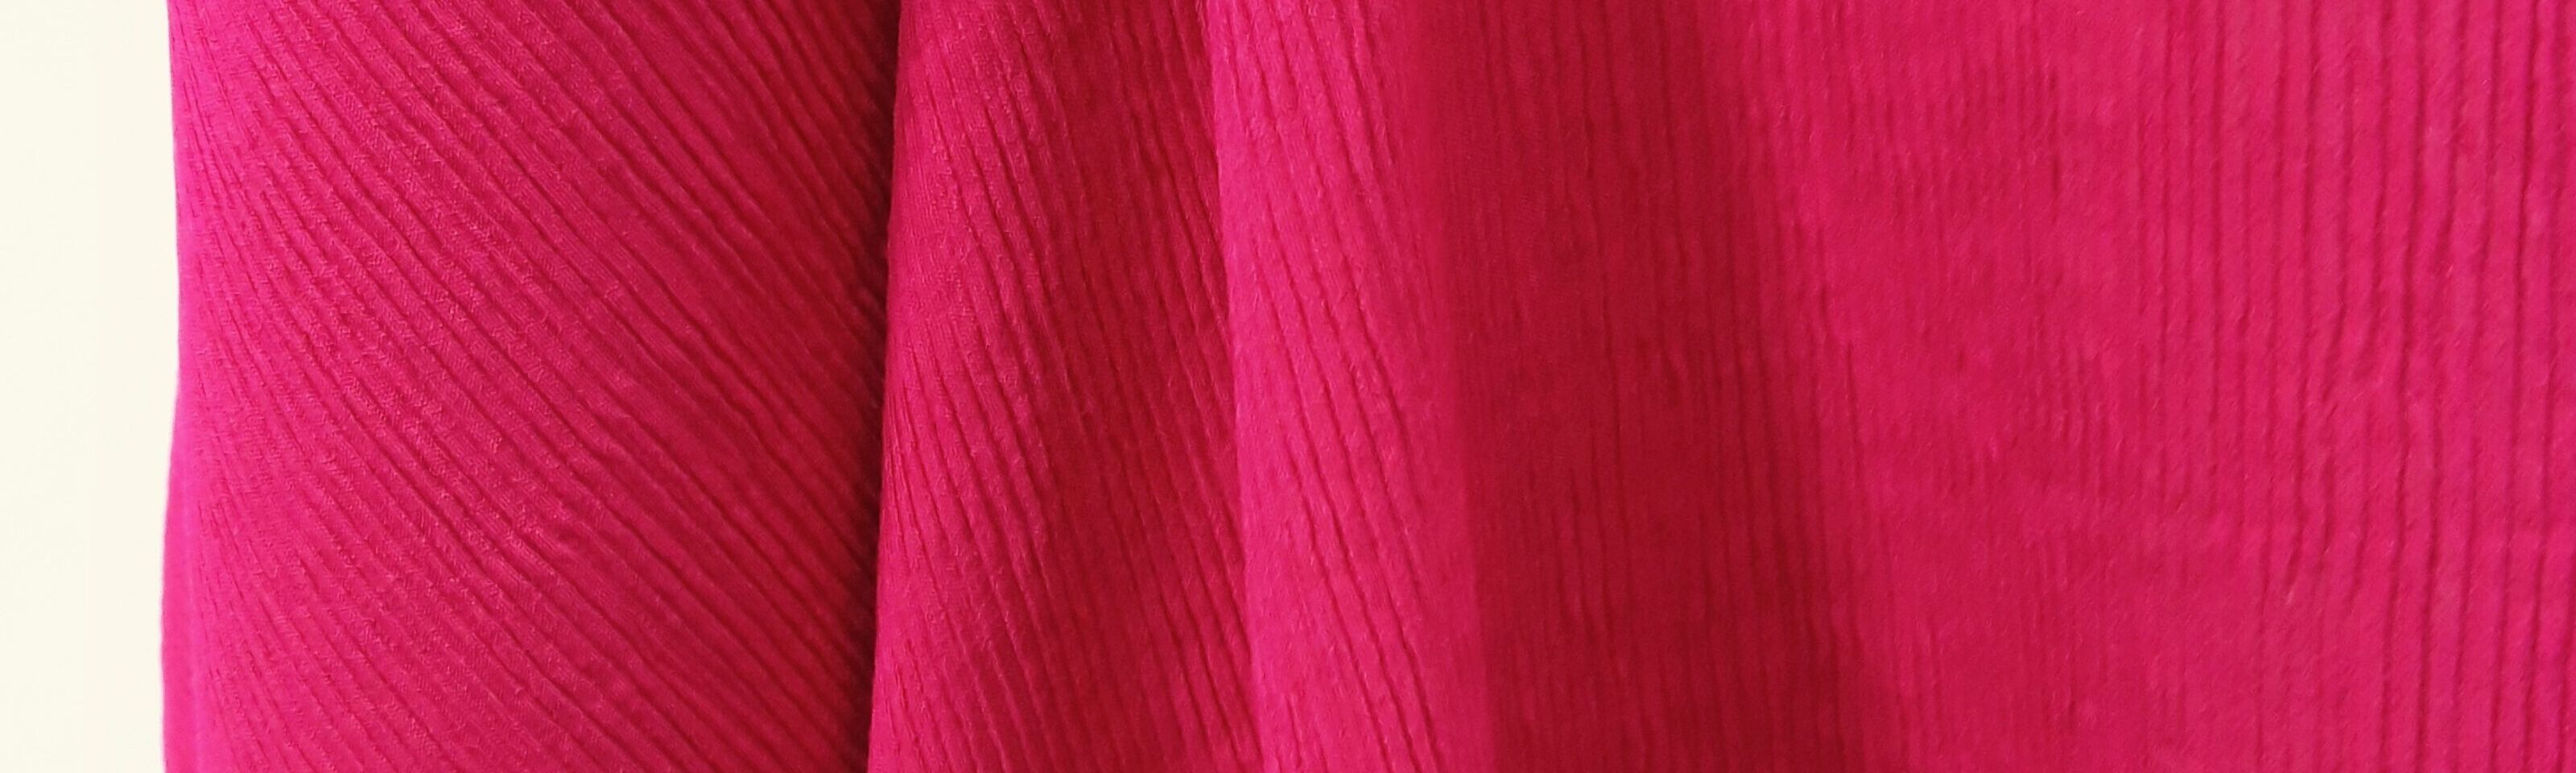 Structured - Cerise - Pleated Stretch Dress Fabric -Close Up Drape  Manequin Fabric Photo 